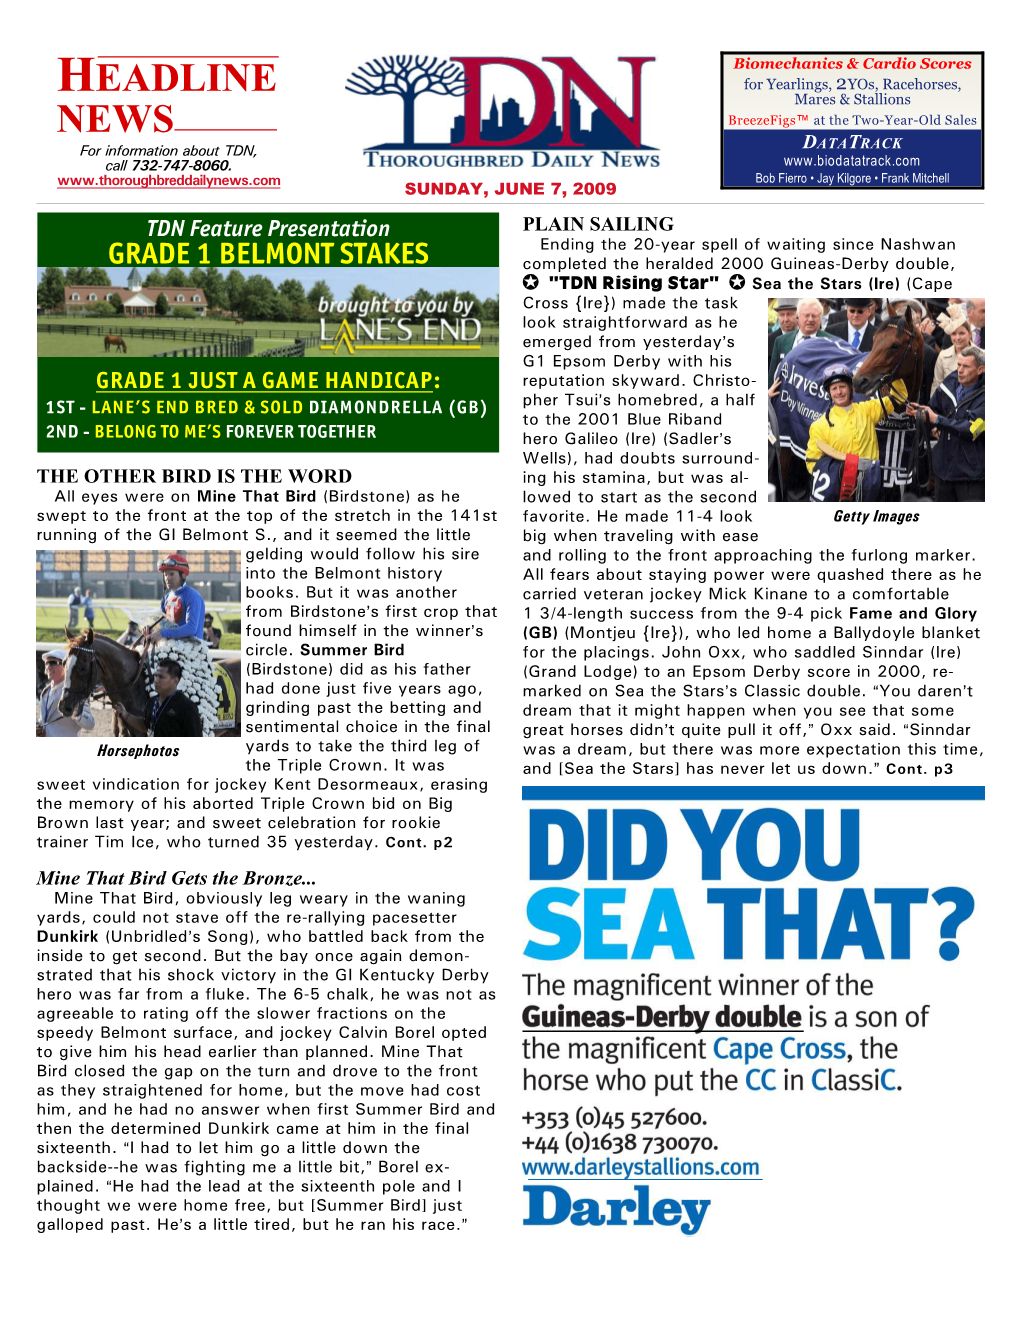 HEADLINE NEWS • 6/7/09 • PAGE 2 of 16